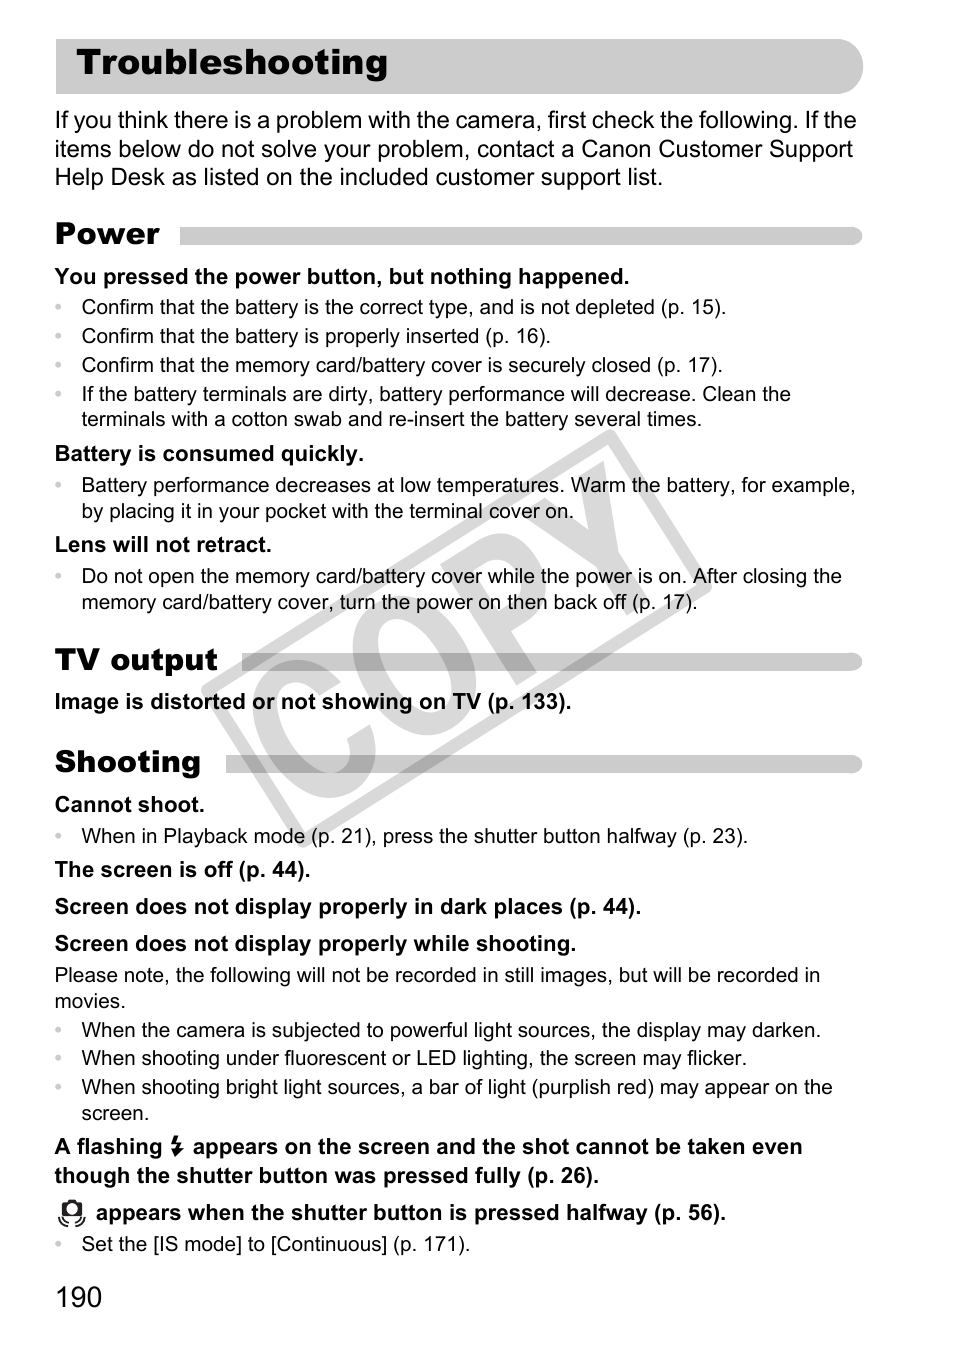 Troubleshooting, Cop y | Canon PowerShot G12 User Manual | Page 190 / 214 |  Original mode